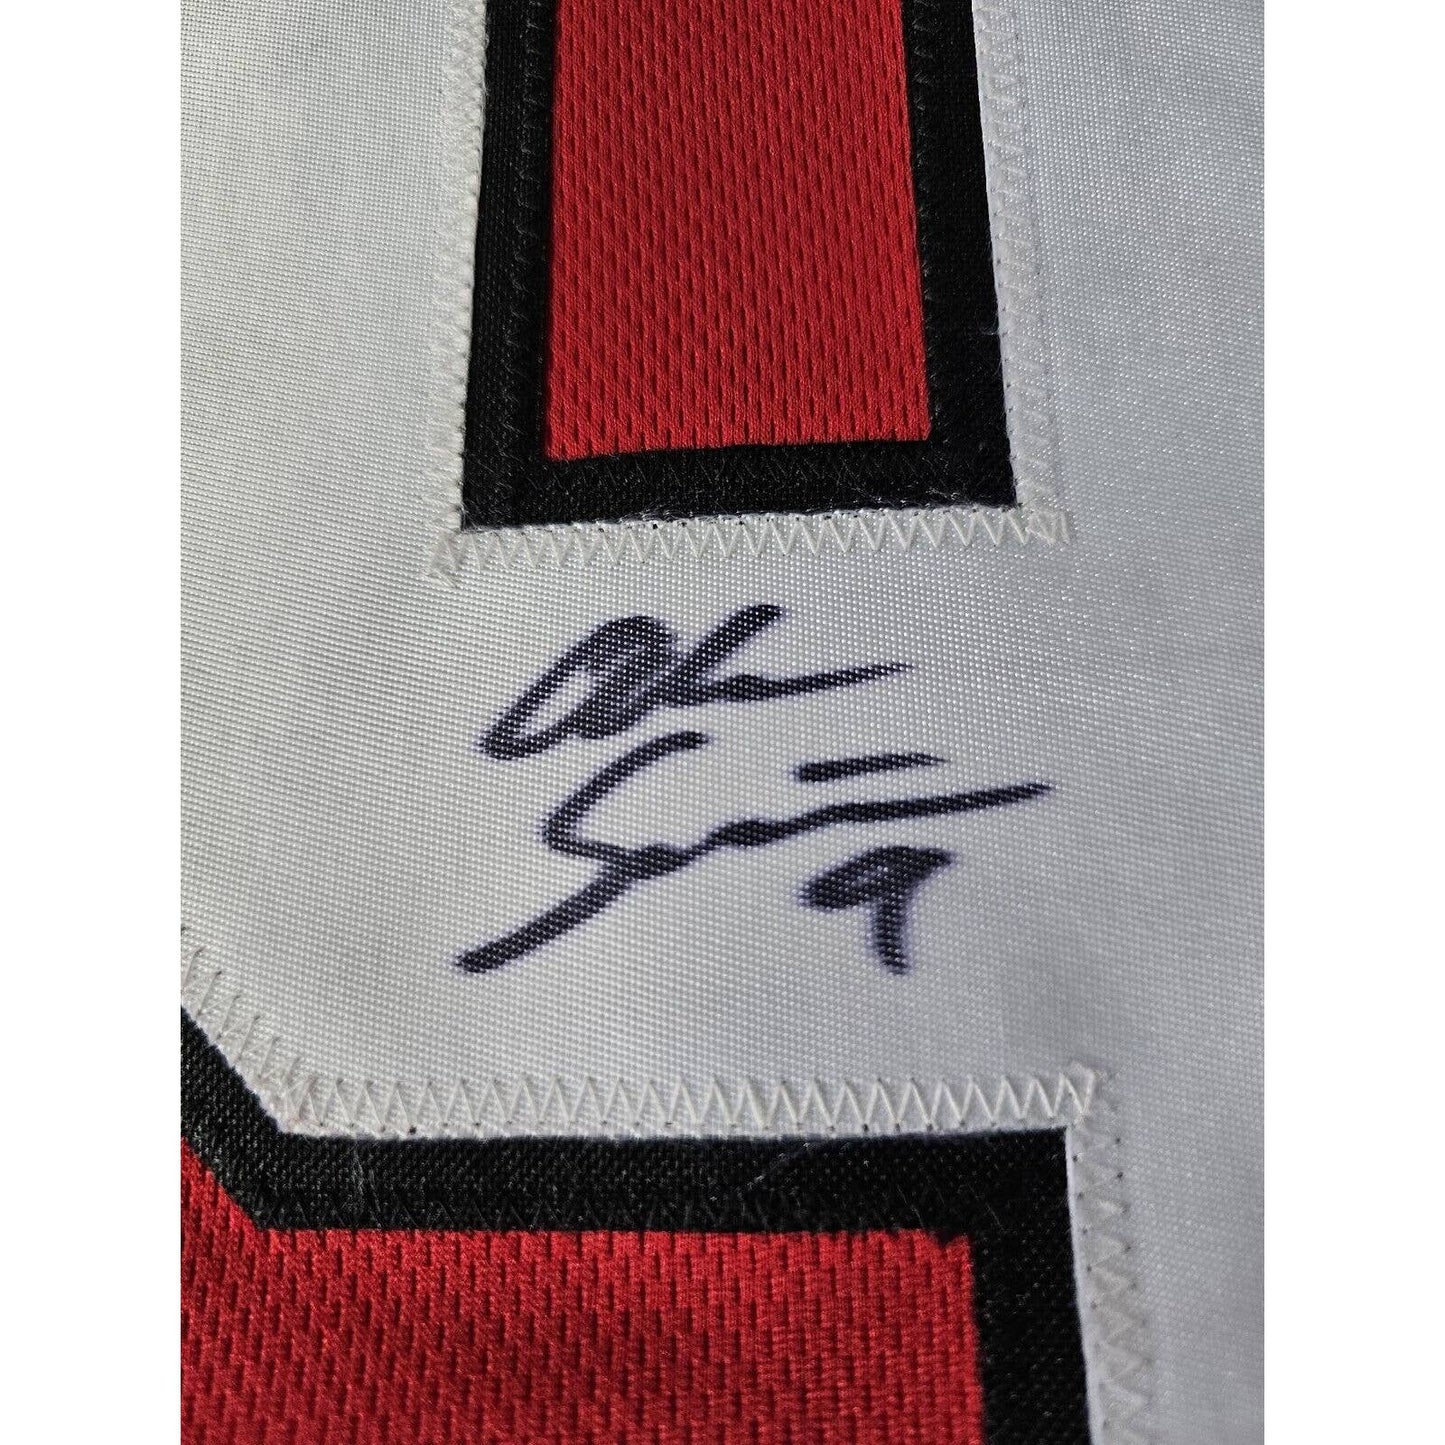 Alec Ogletree Autographed/Signed Jersey JSA Sticker Georgia Bulldogs